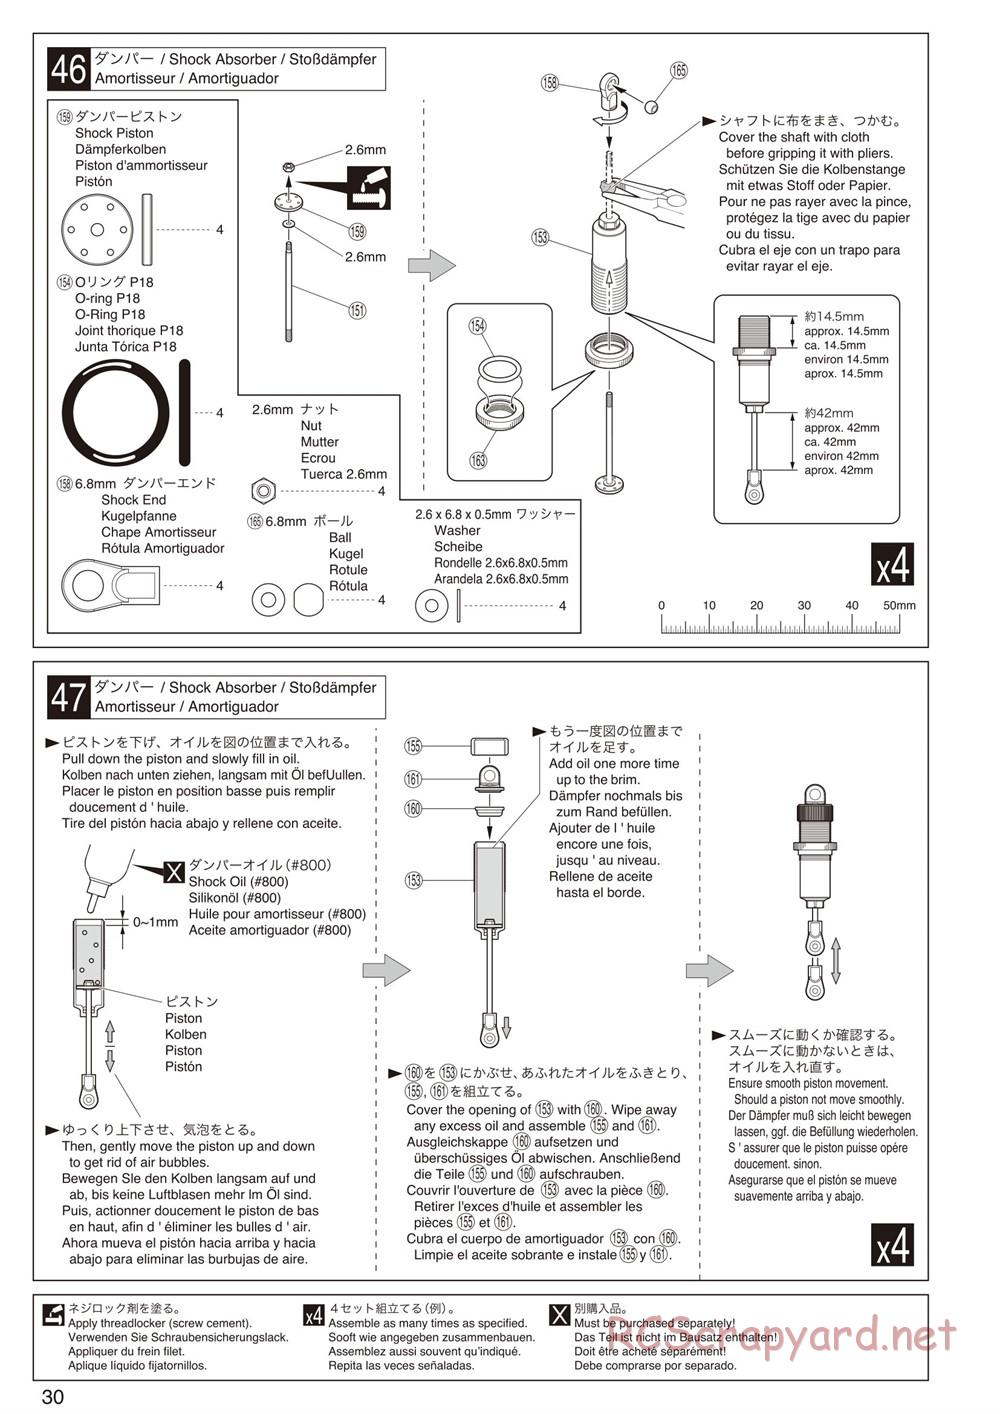 Kyosho - Inferno NEO ST Race Spec - Manual - Page 30